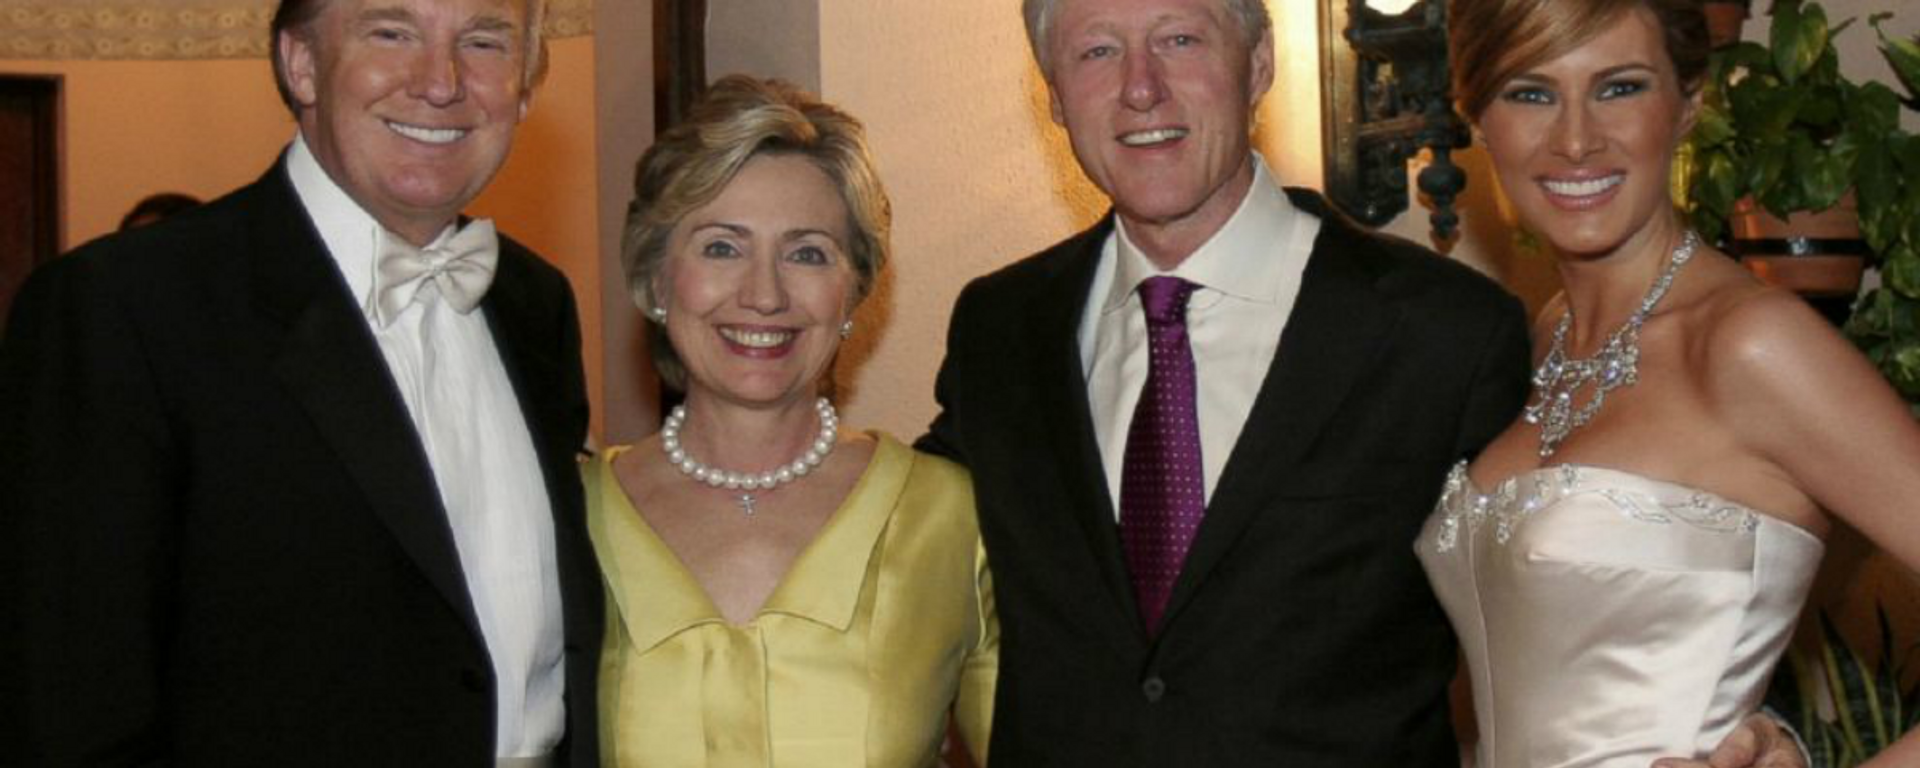 Bill and Hillary Clinton at Donald and Melania Trump's wedding - Sputnik International, 1920, 18.06.2022